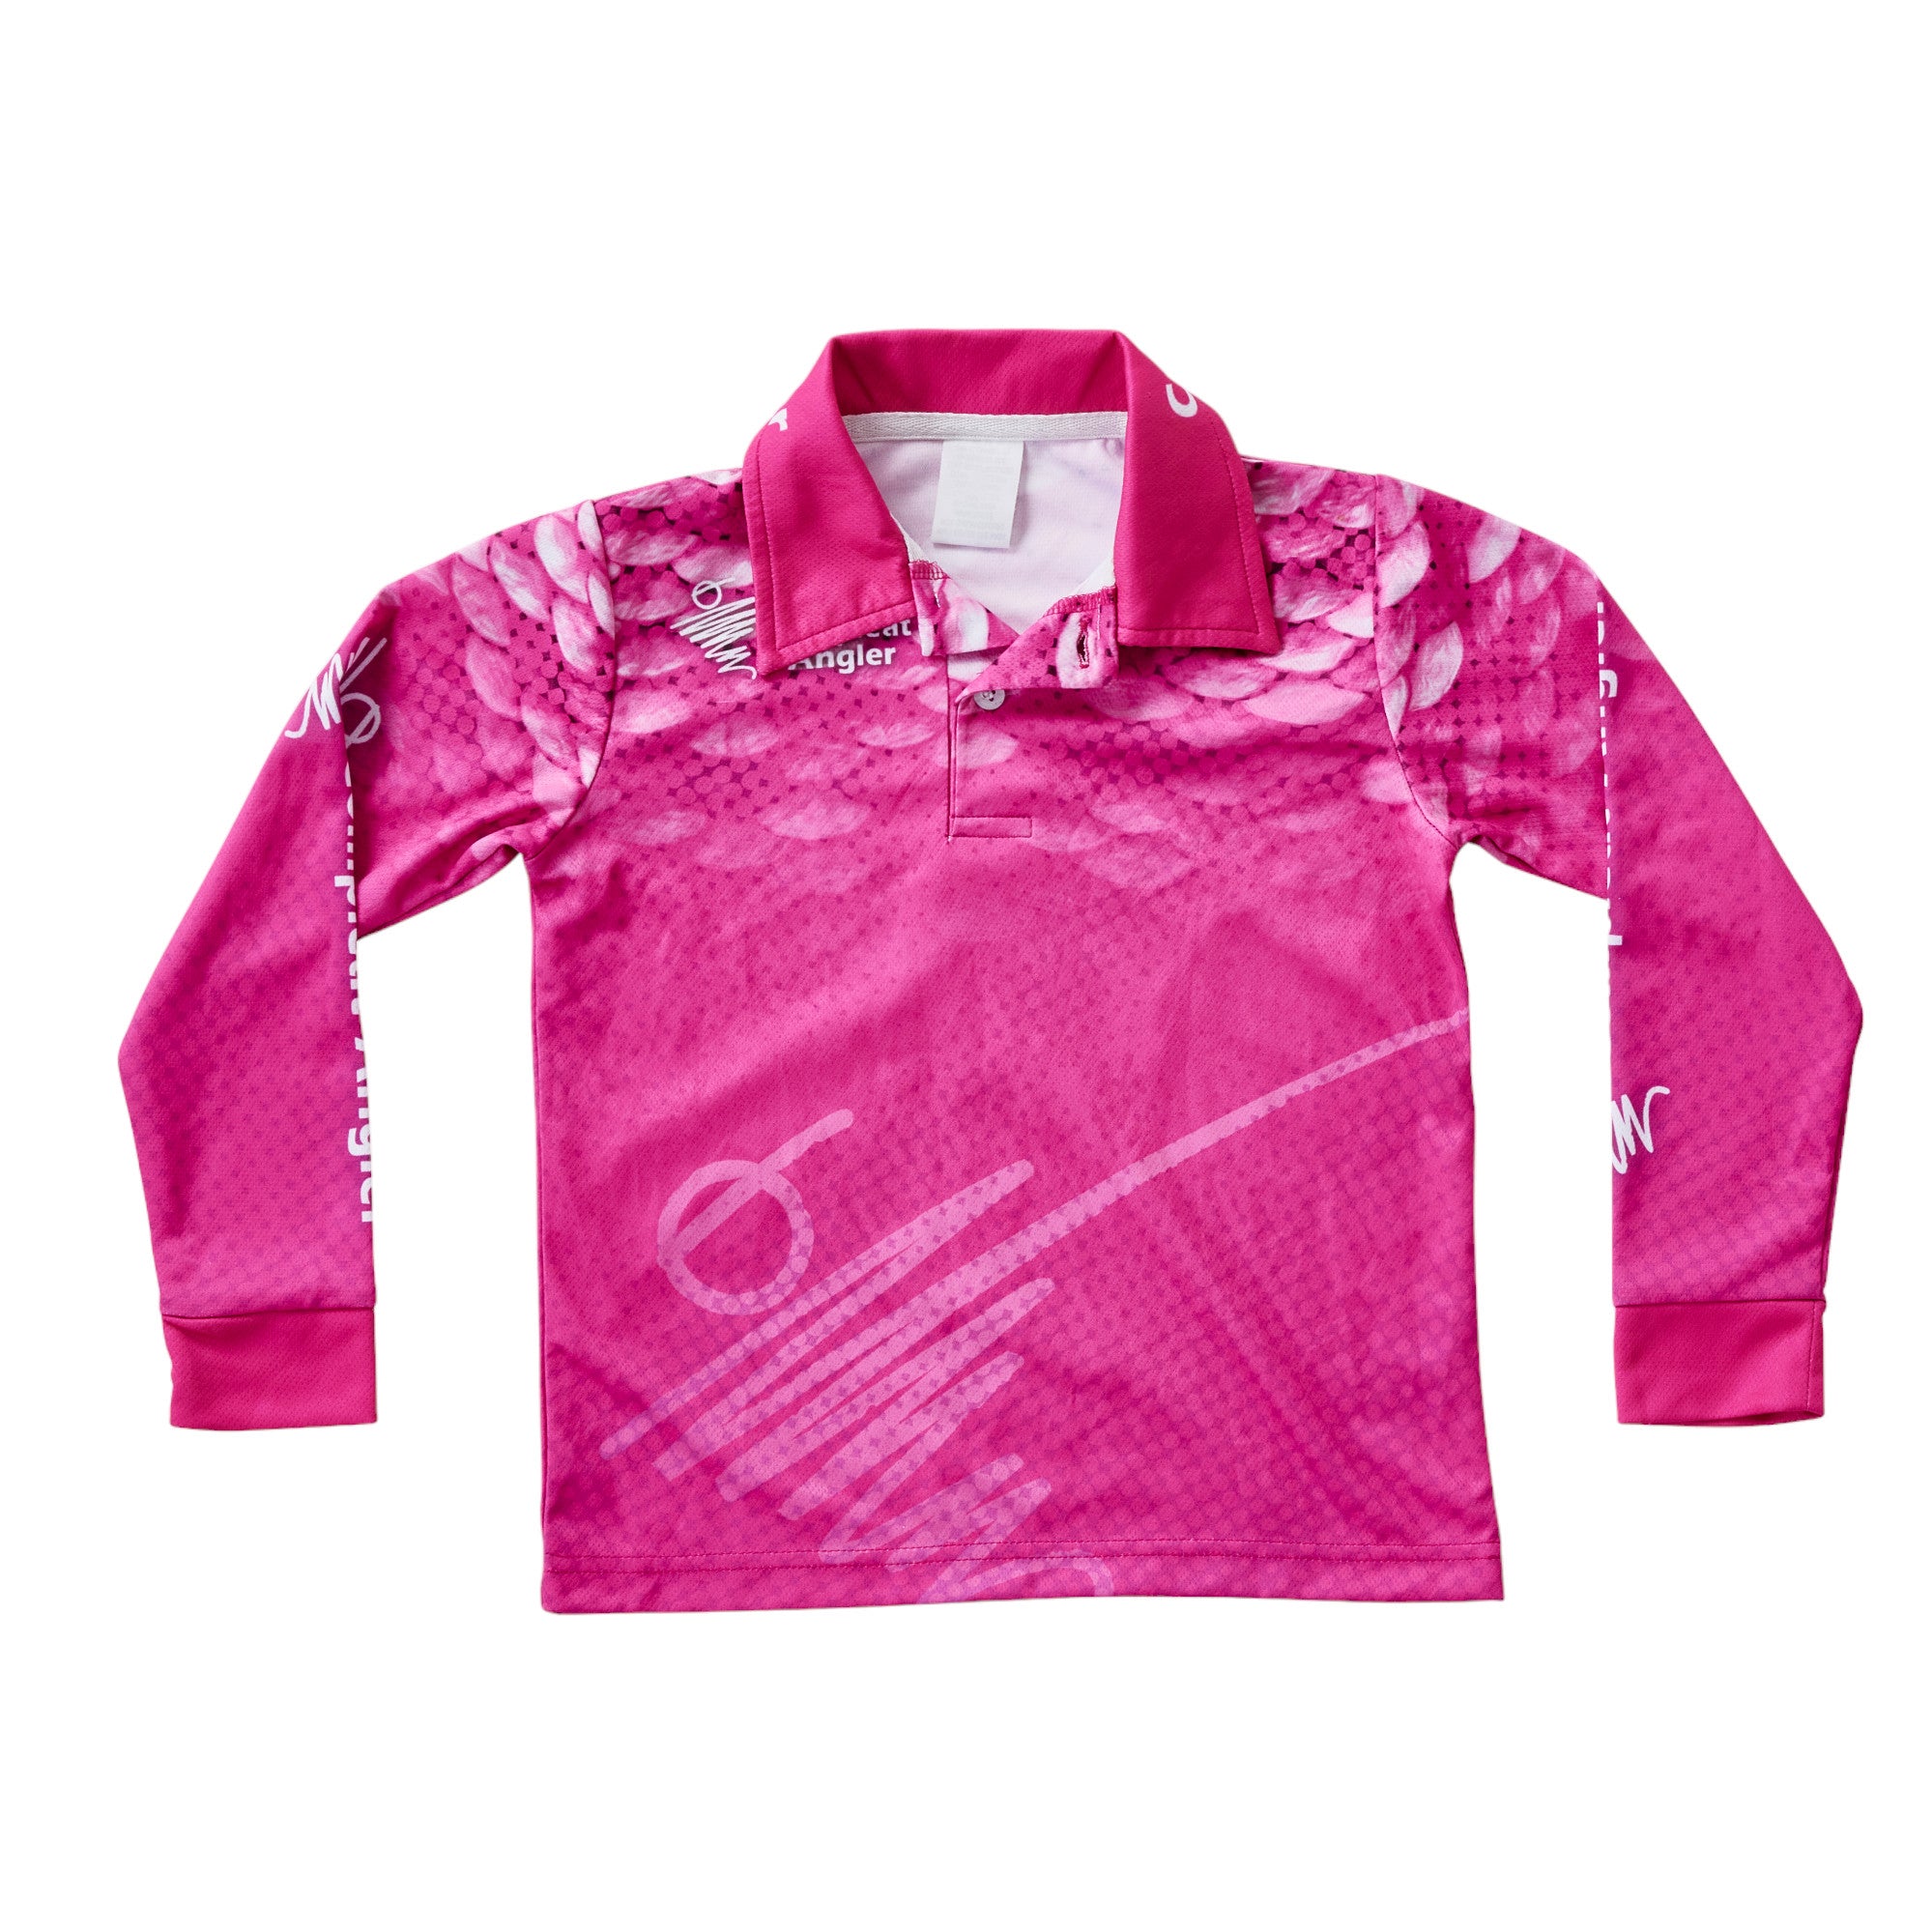 Compleat Angler Tournament Shirt Kids Pink